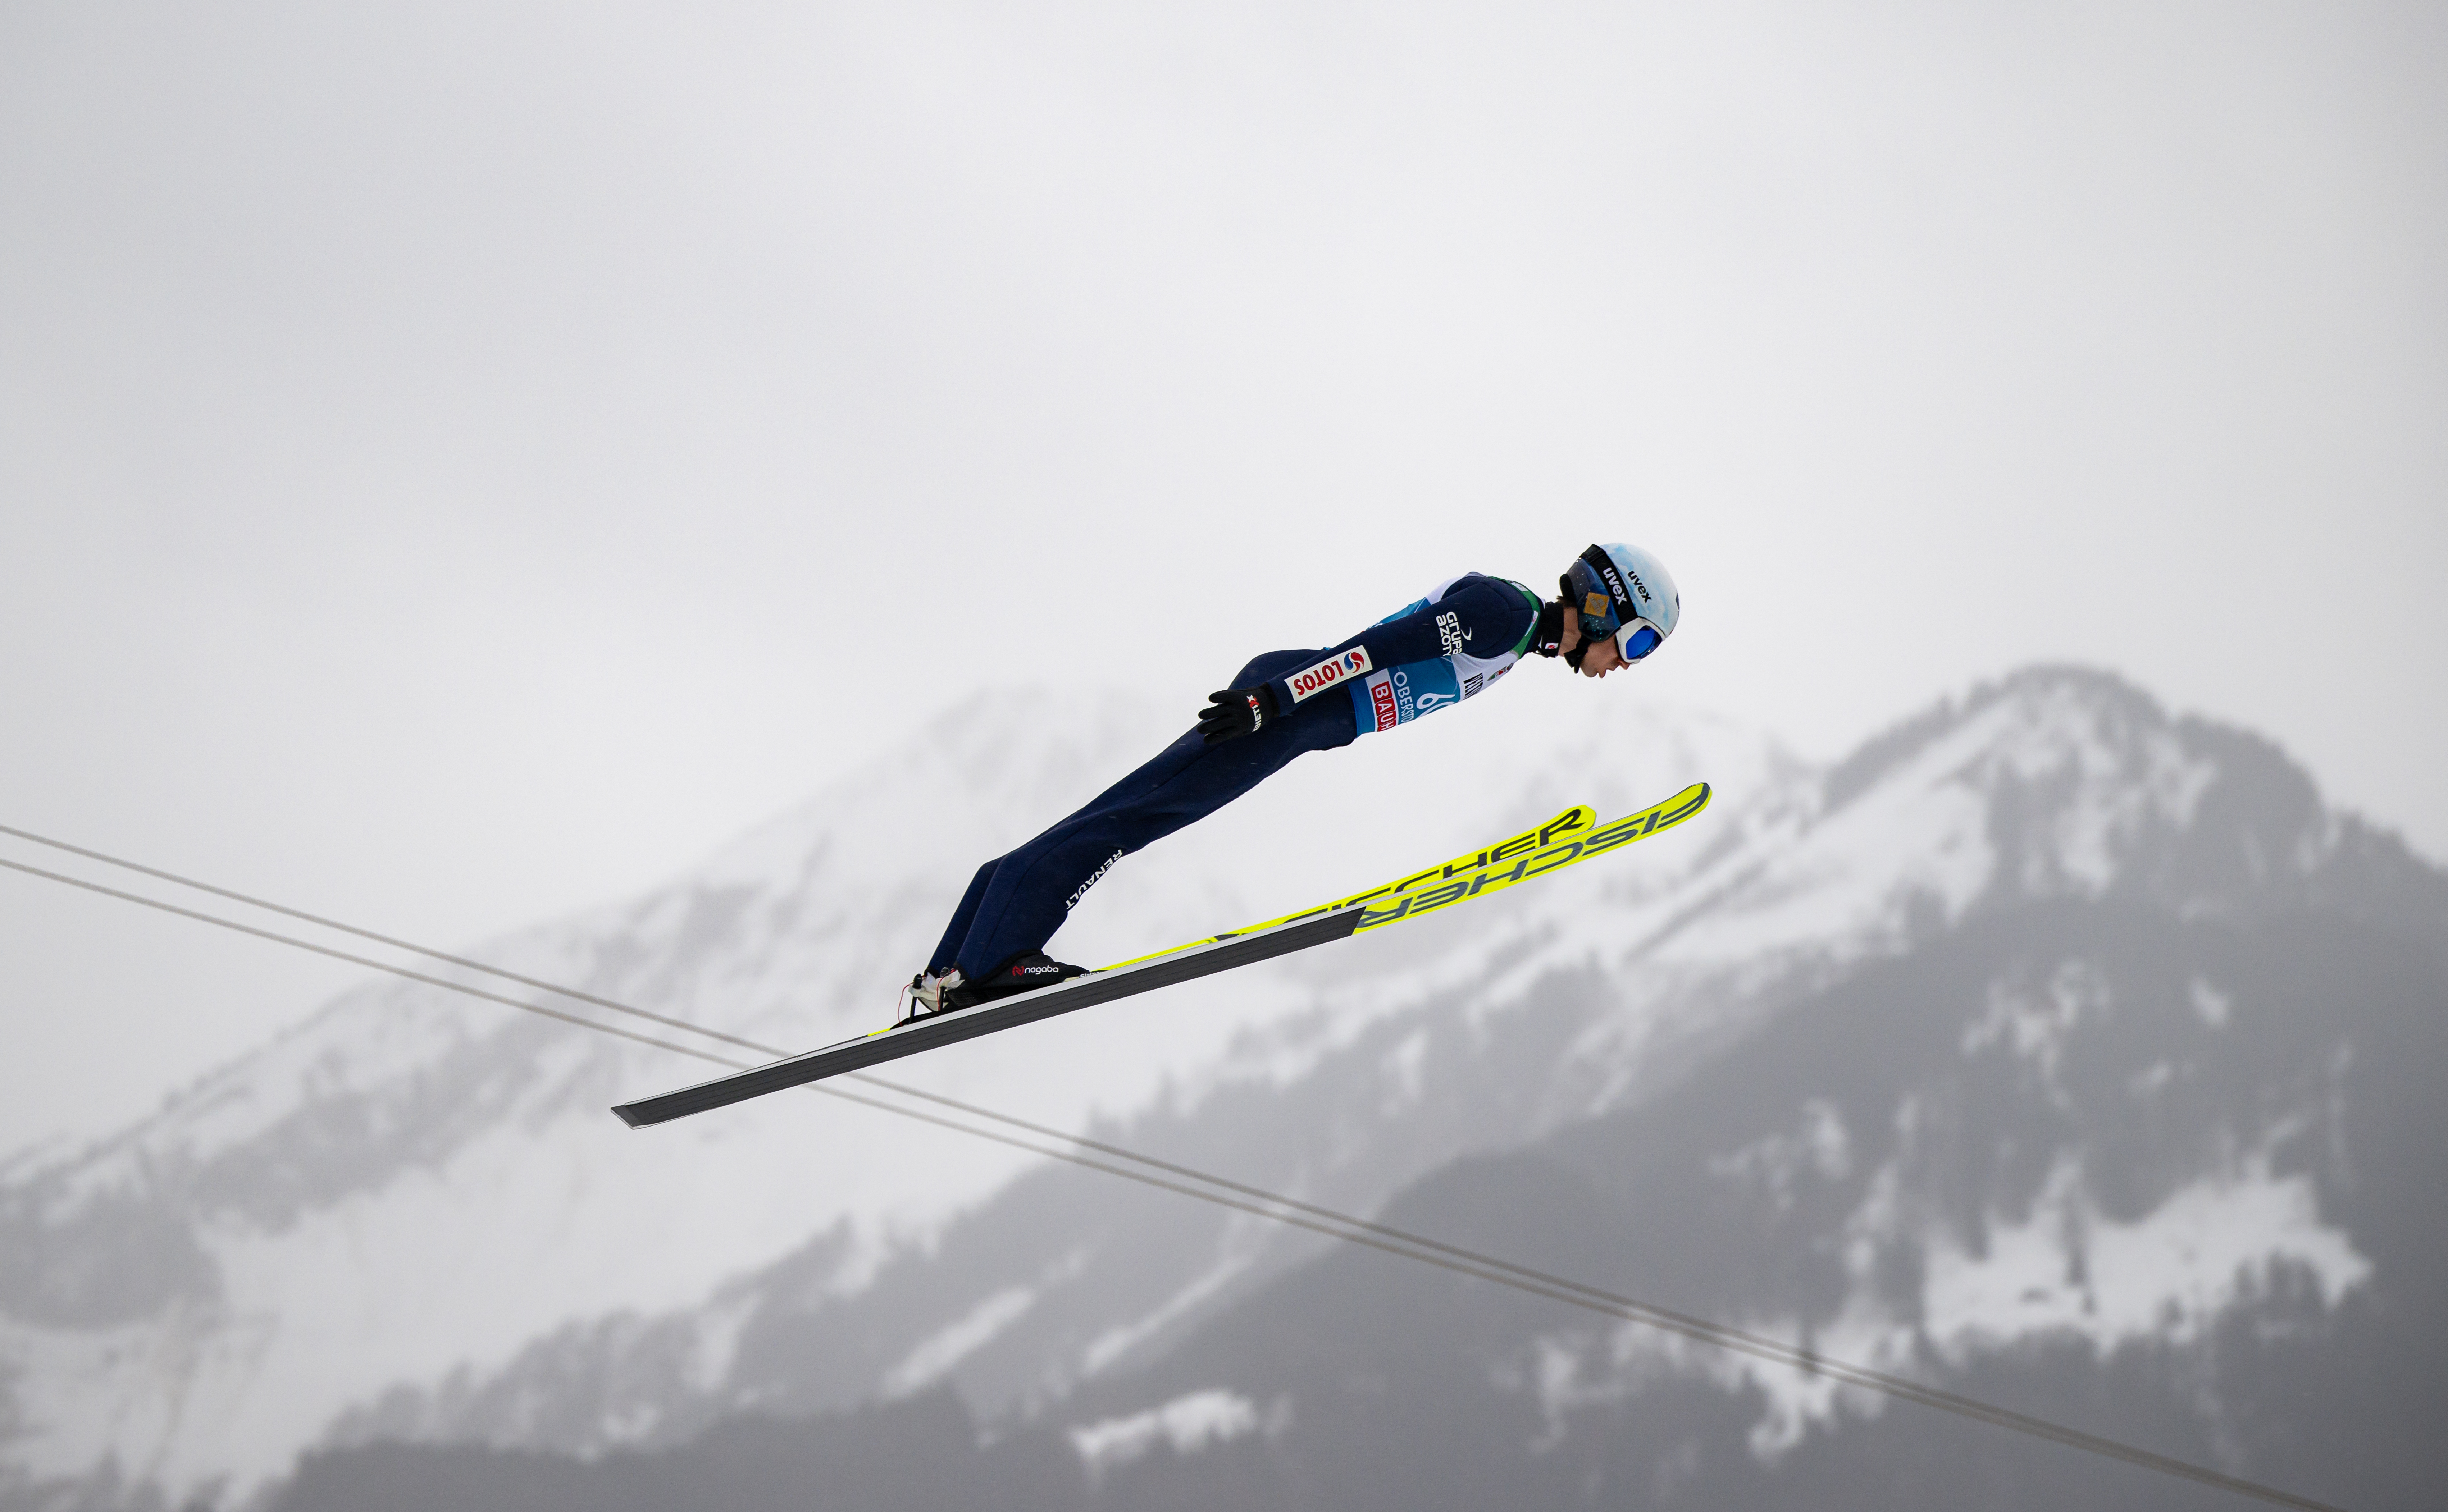 ski jumping video on demand